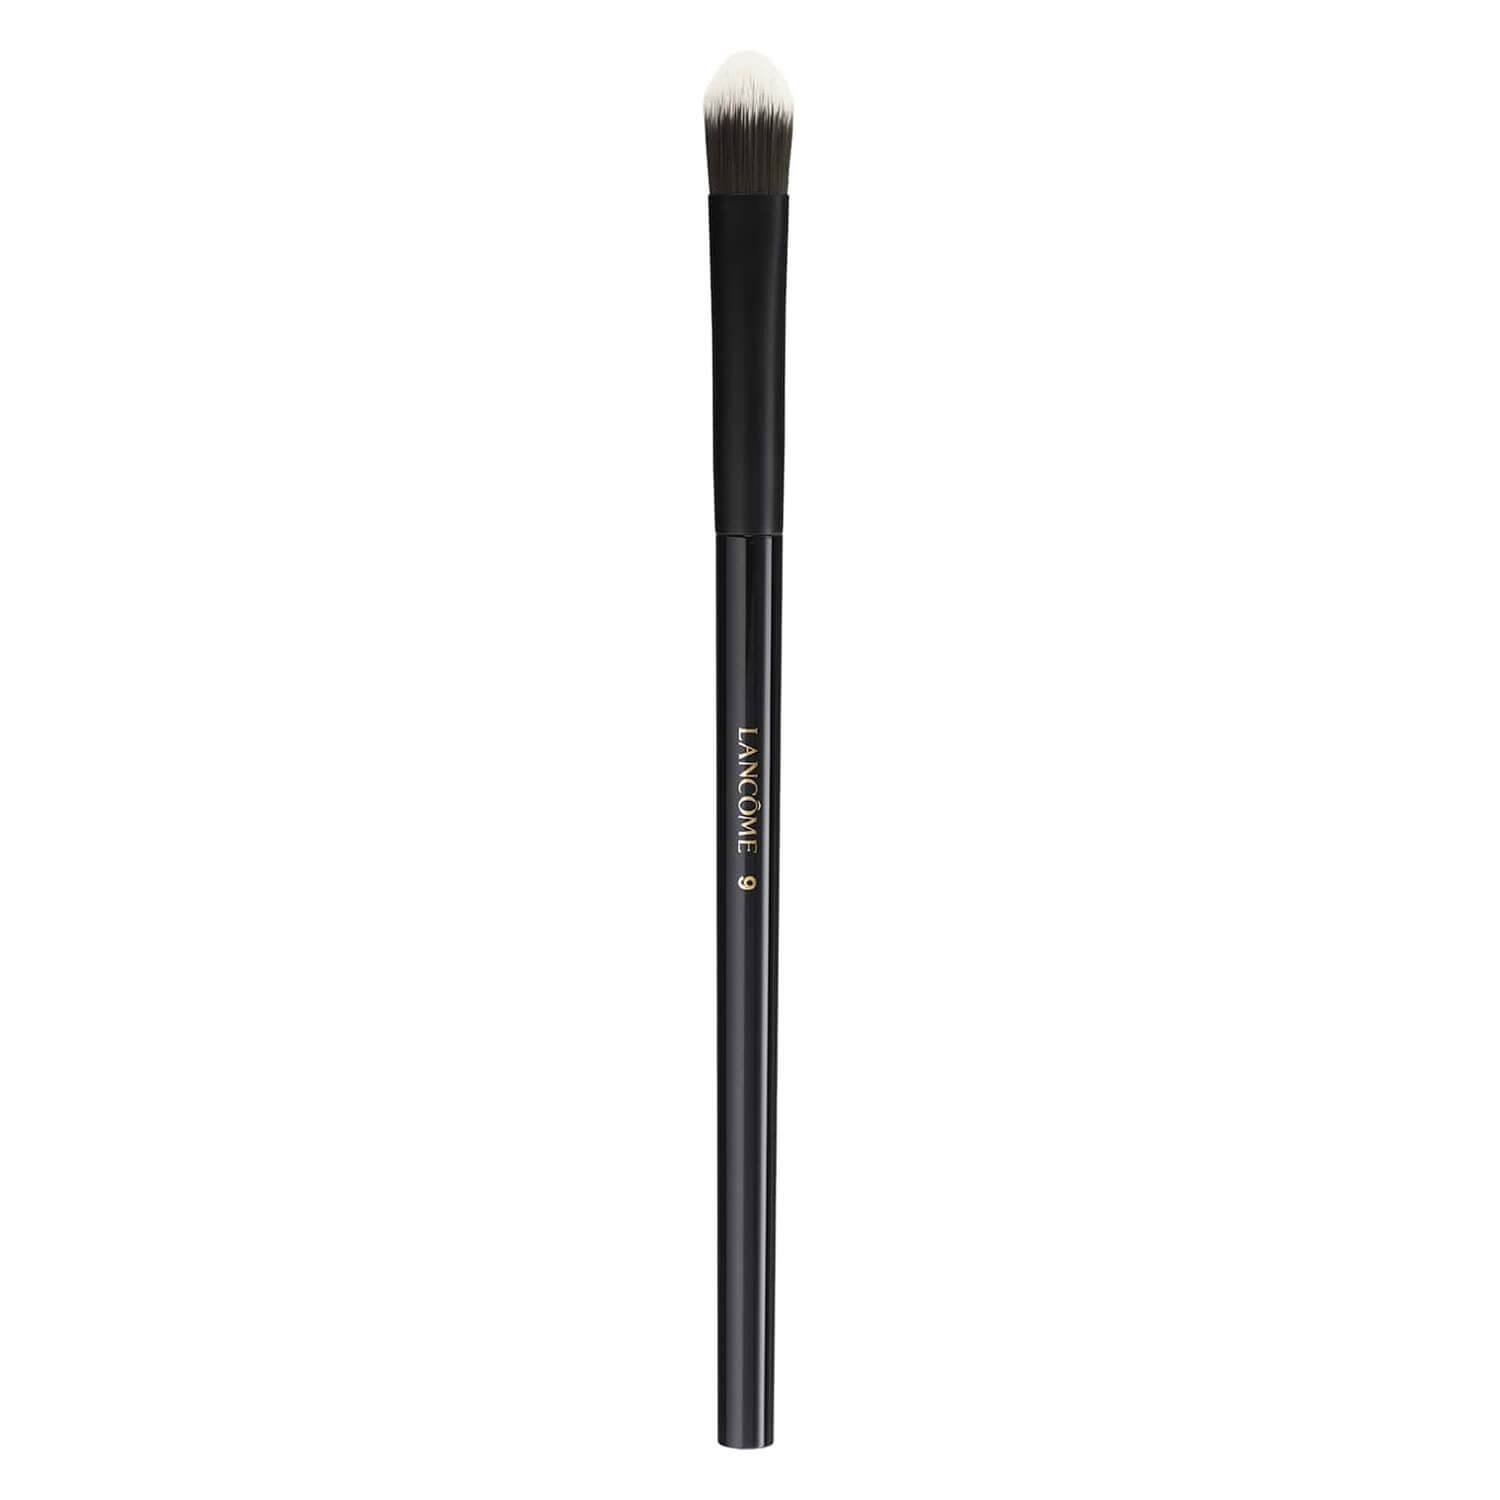 Produktbild von Lancôme Tools - Conceal & Correct Concealer Brush 09